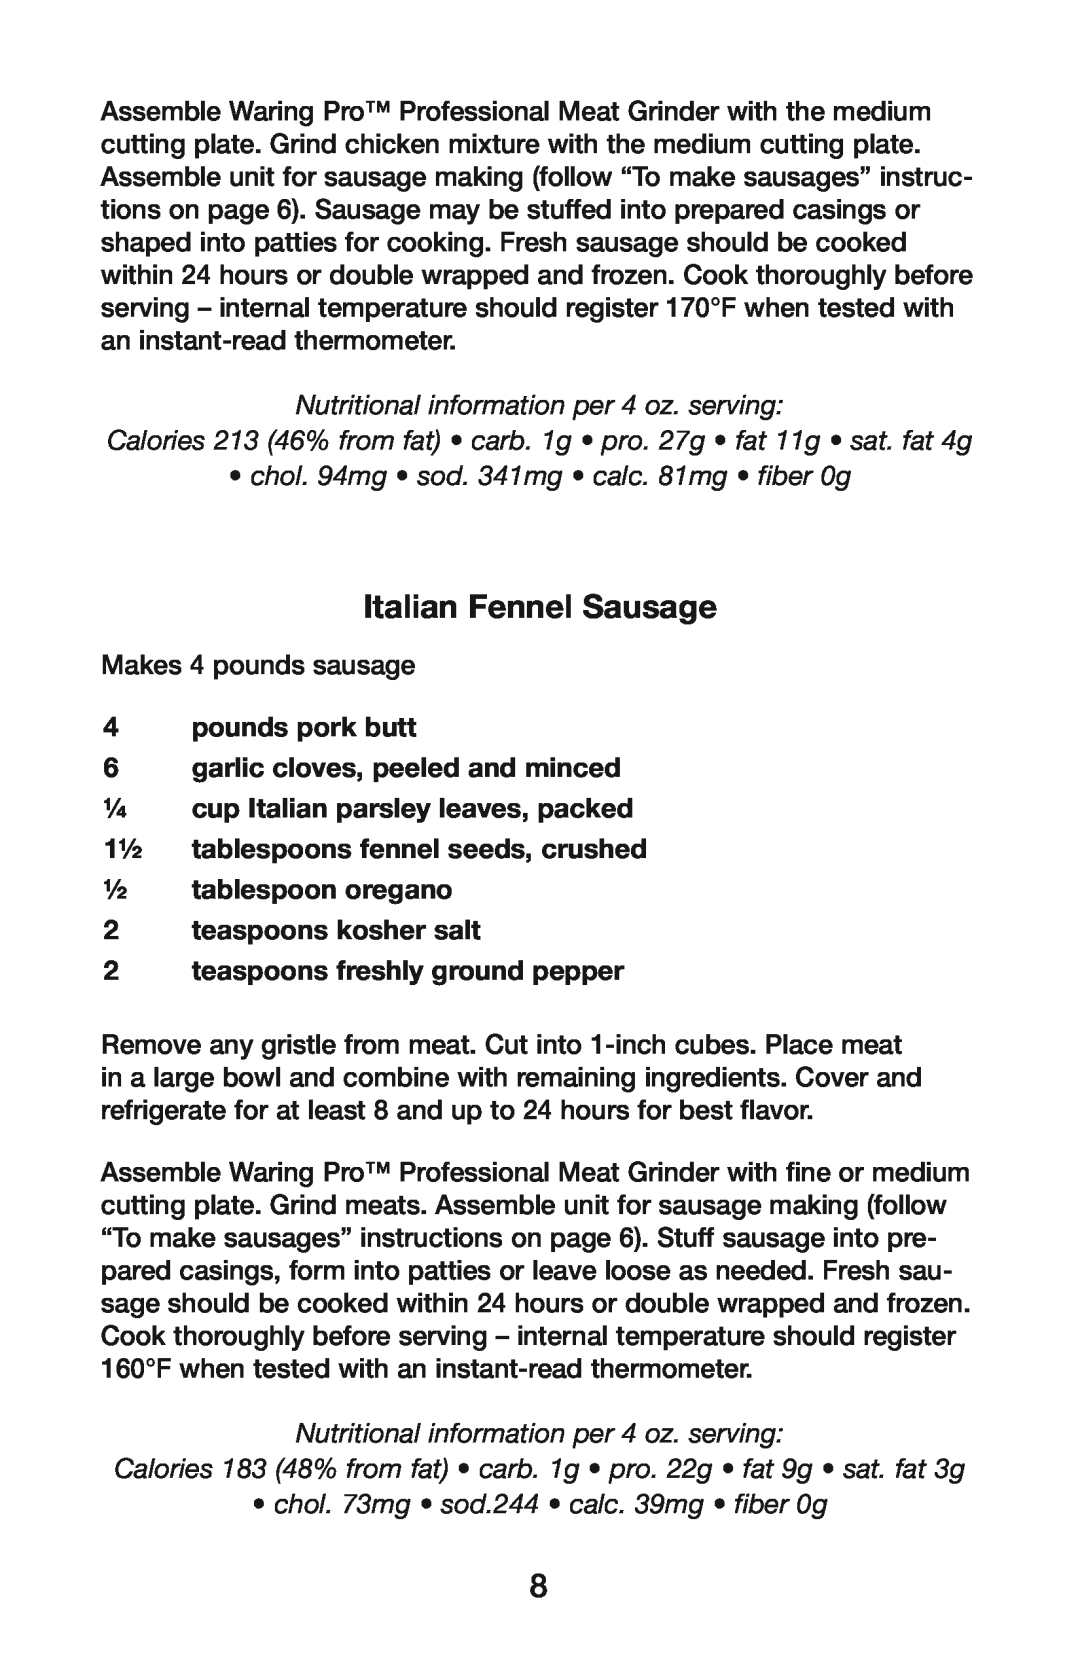 Waring MG800 Italian Fennel Sausage, Nutritional information per 4 oz. serving, chol. 94mg sod. 341mg calc. 81mg fiber 0g 